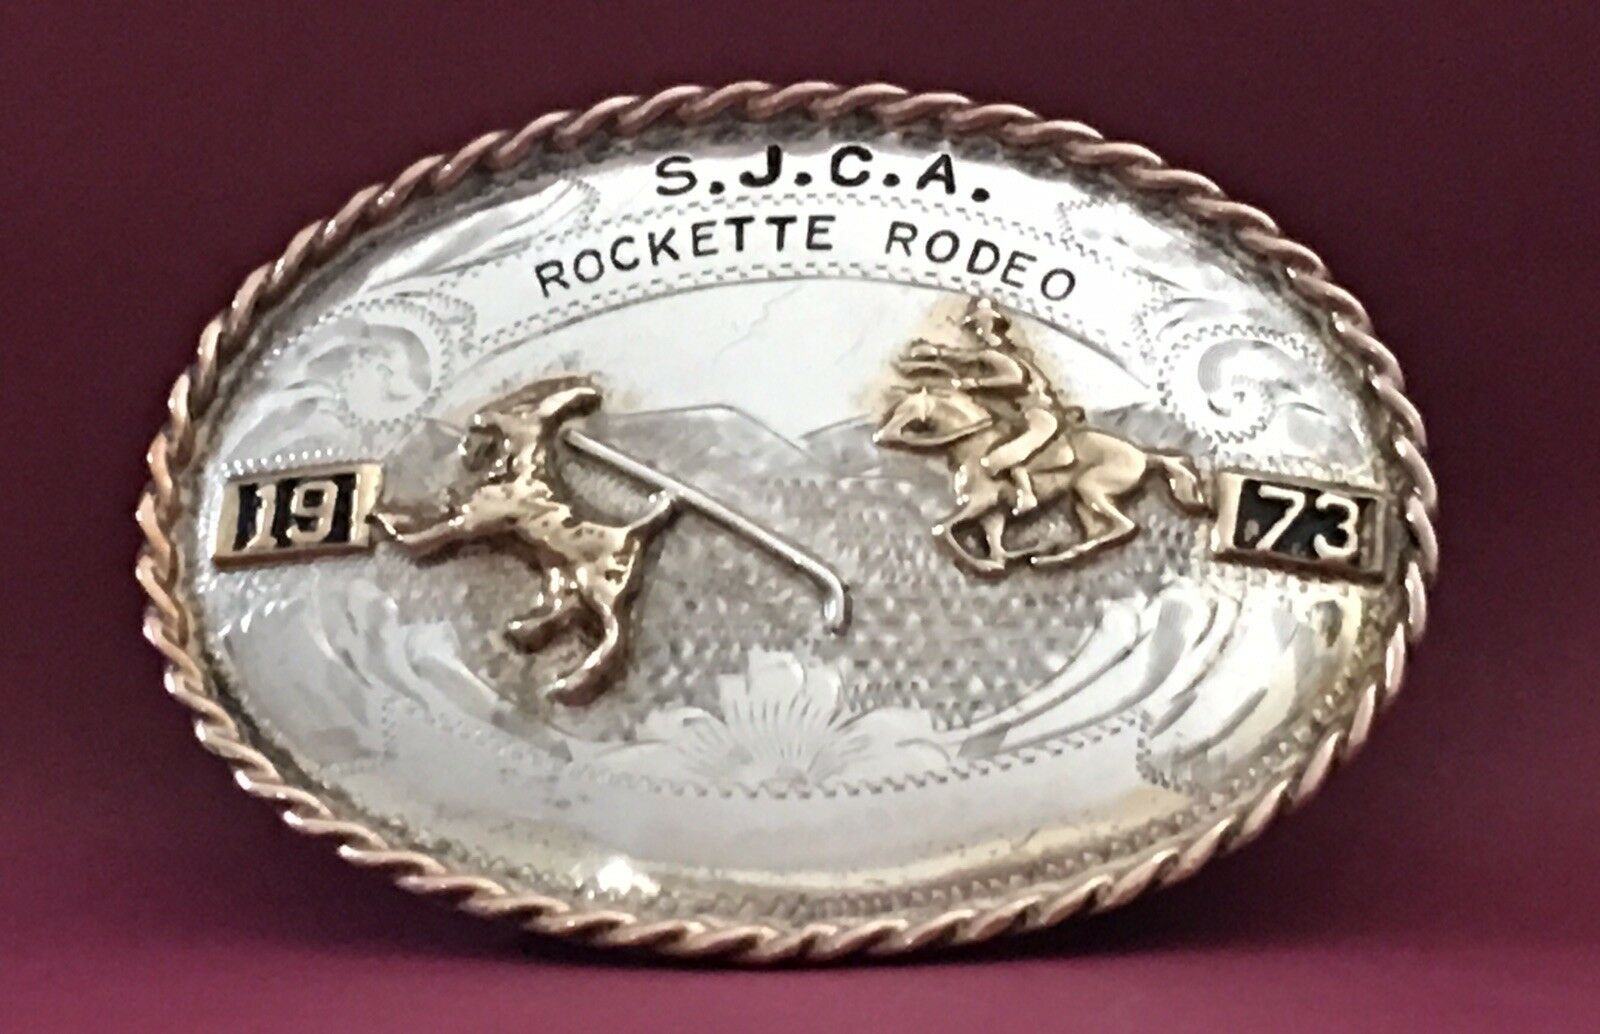 Vtg 1973 S.j.c.a. Rockette Rodeo Sterling Silver Cowboy Rodeo Trophy Belt Buckle